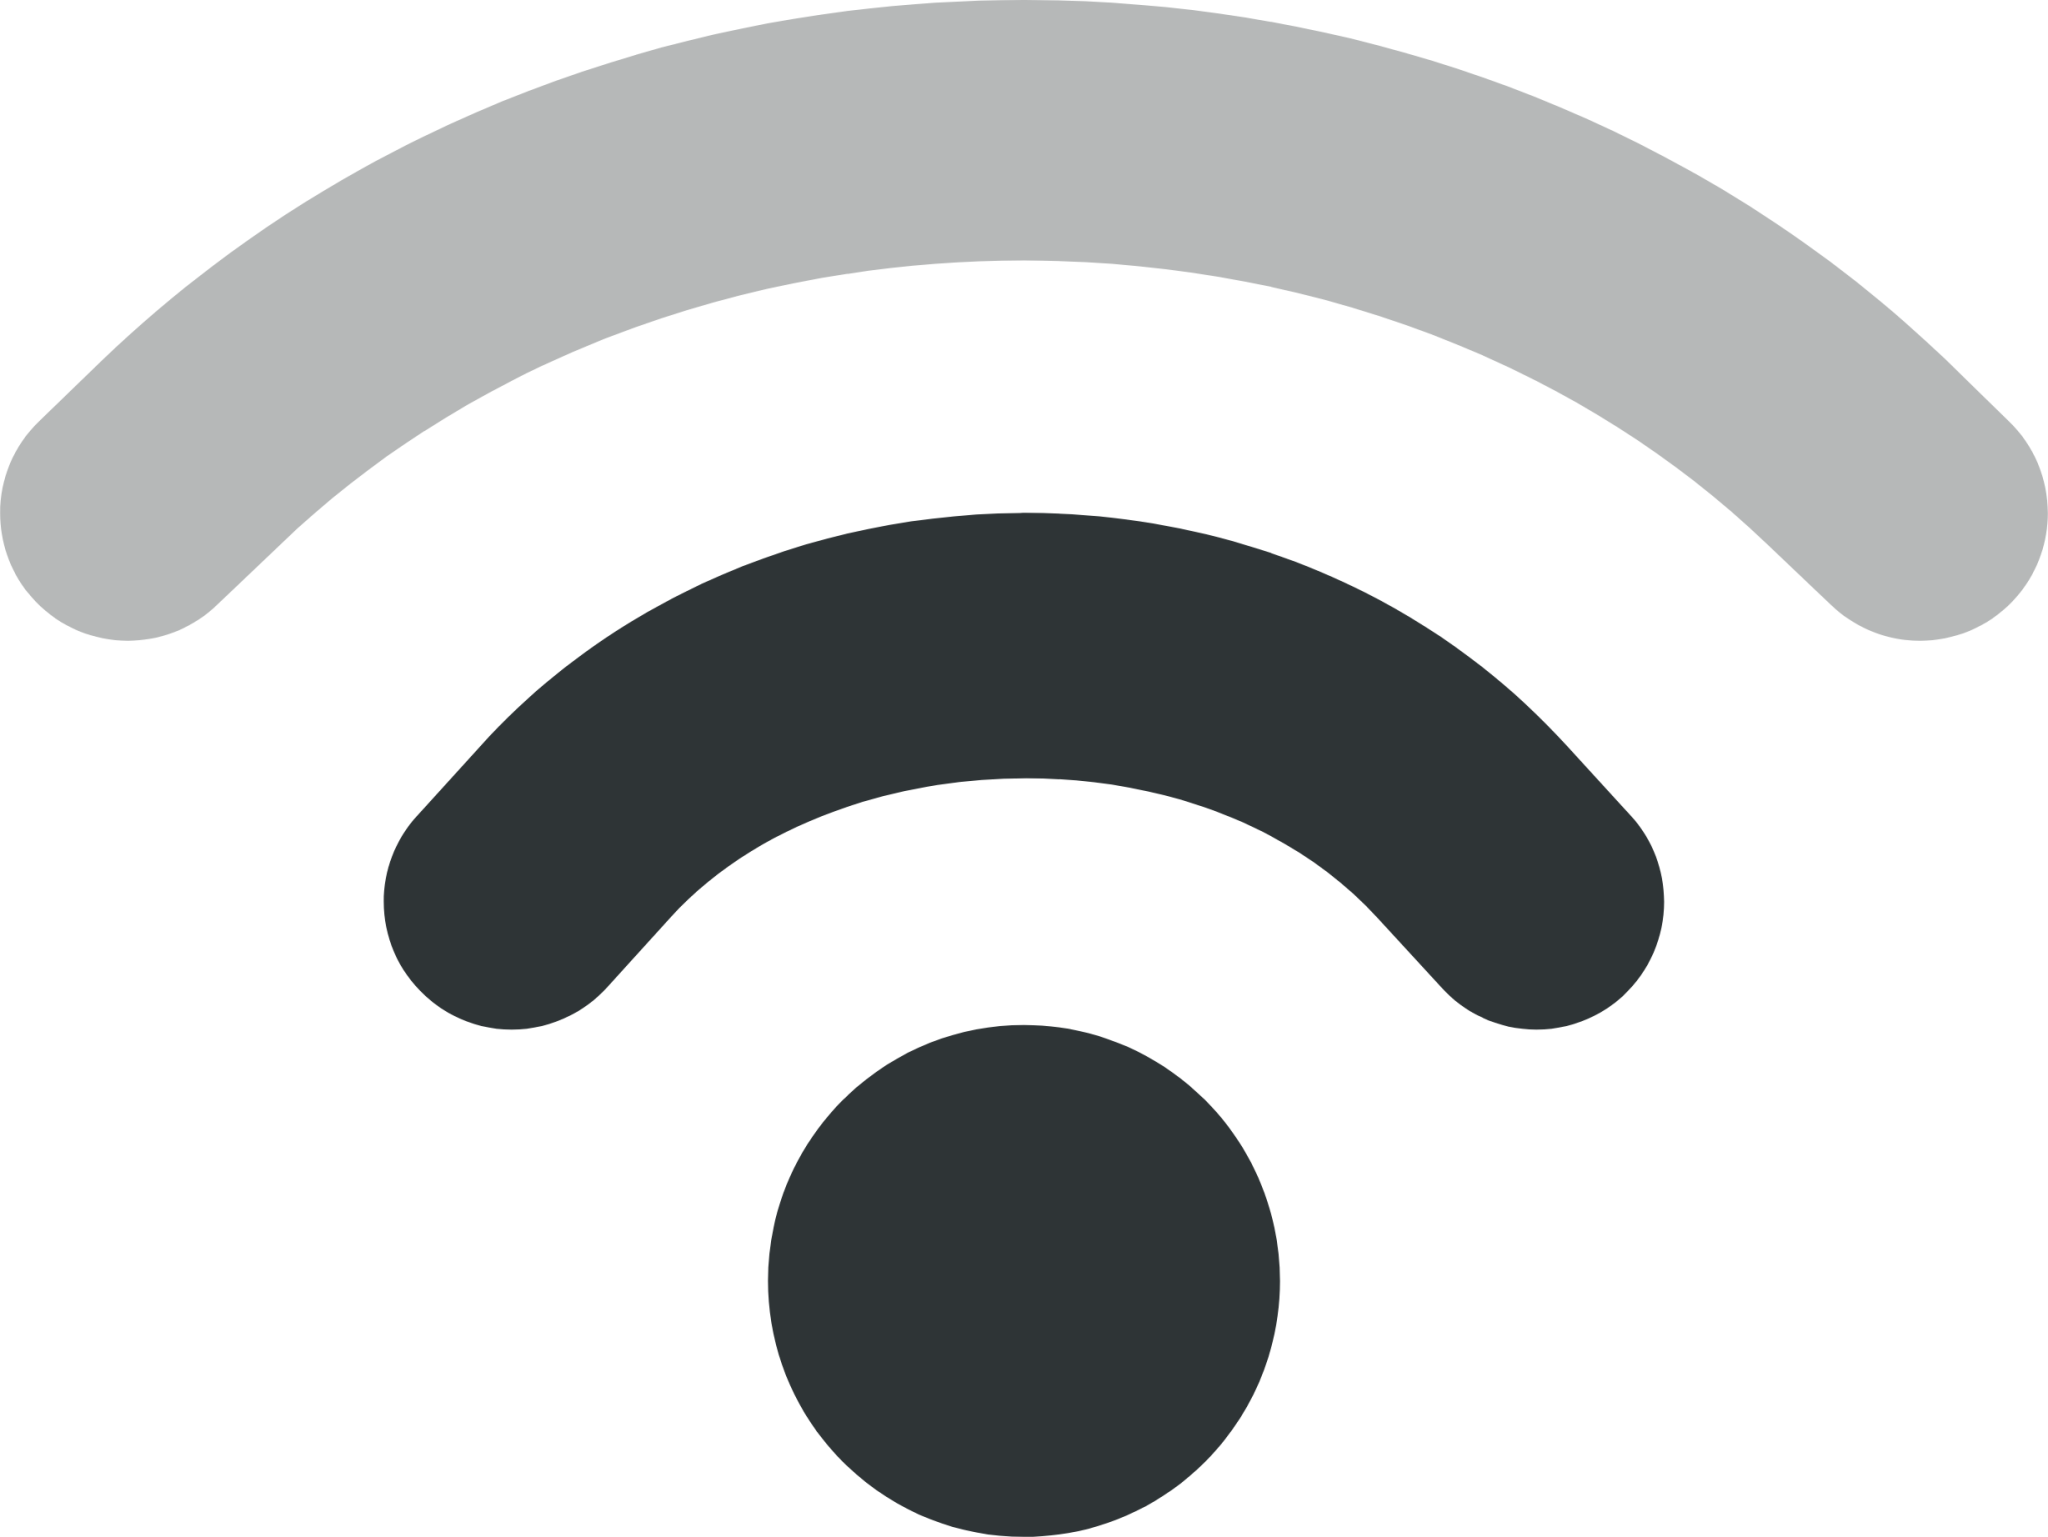 network wireless signal ok symbolic icon